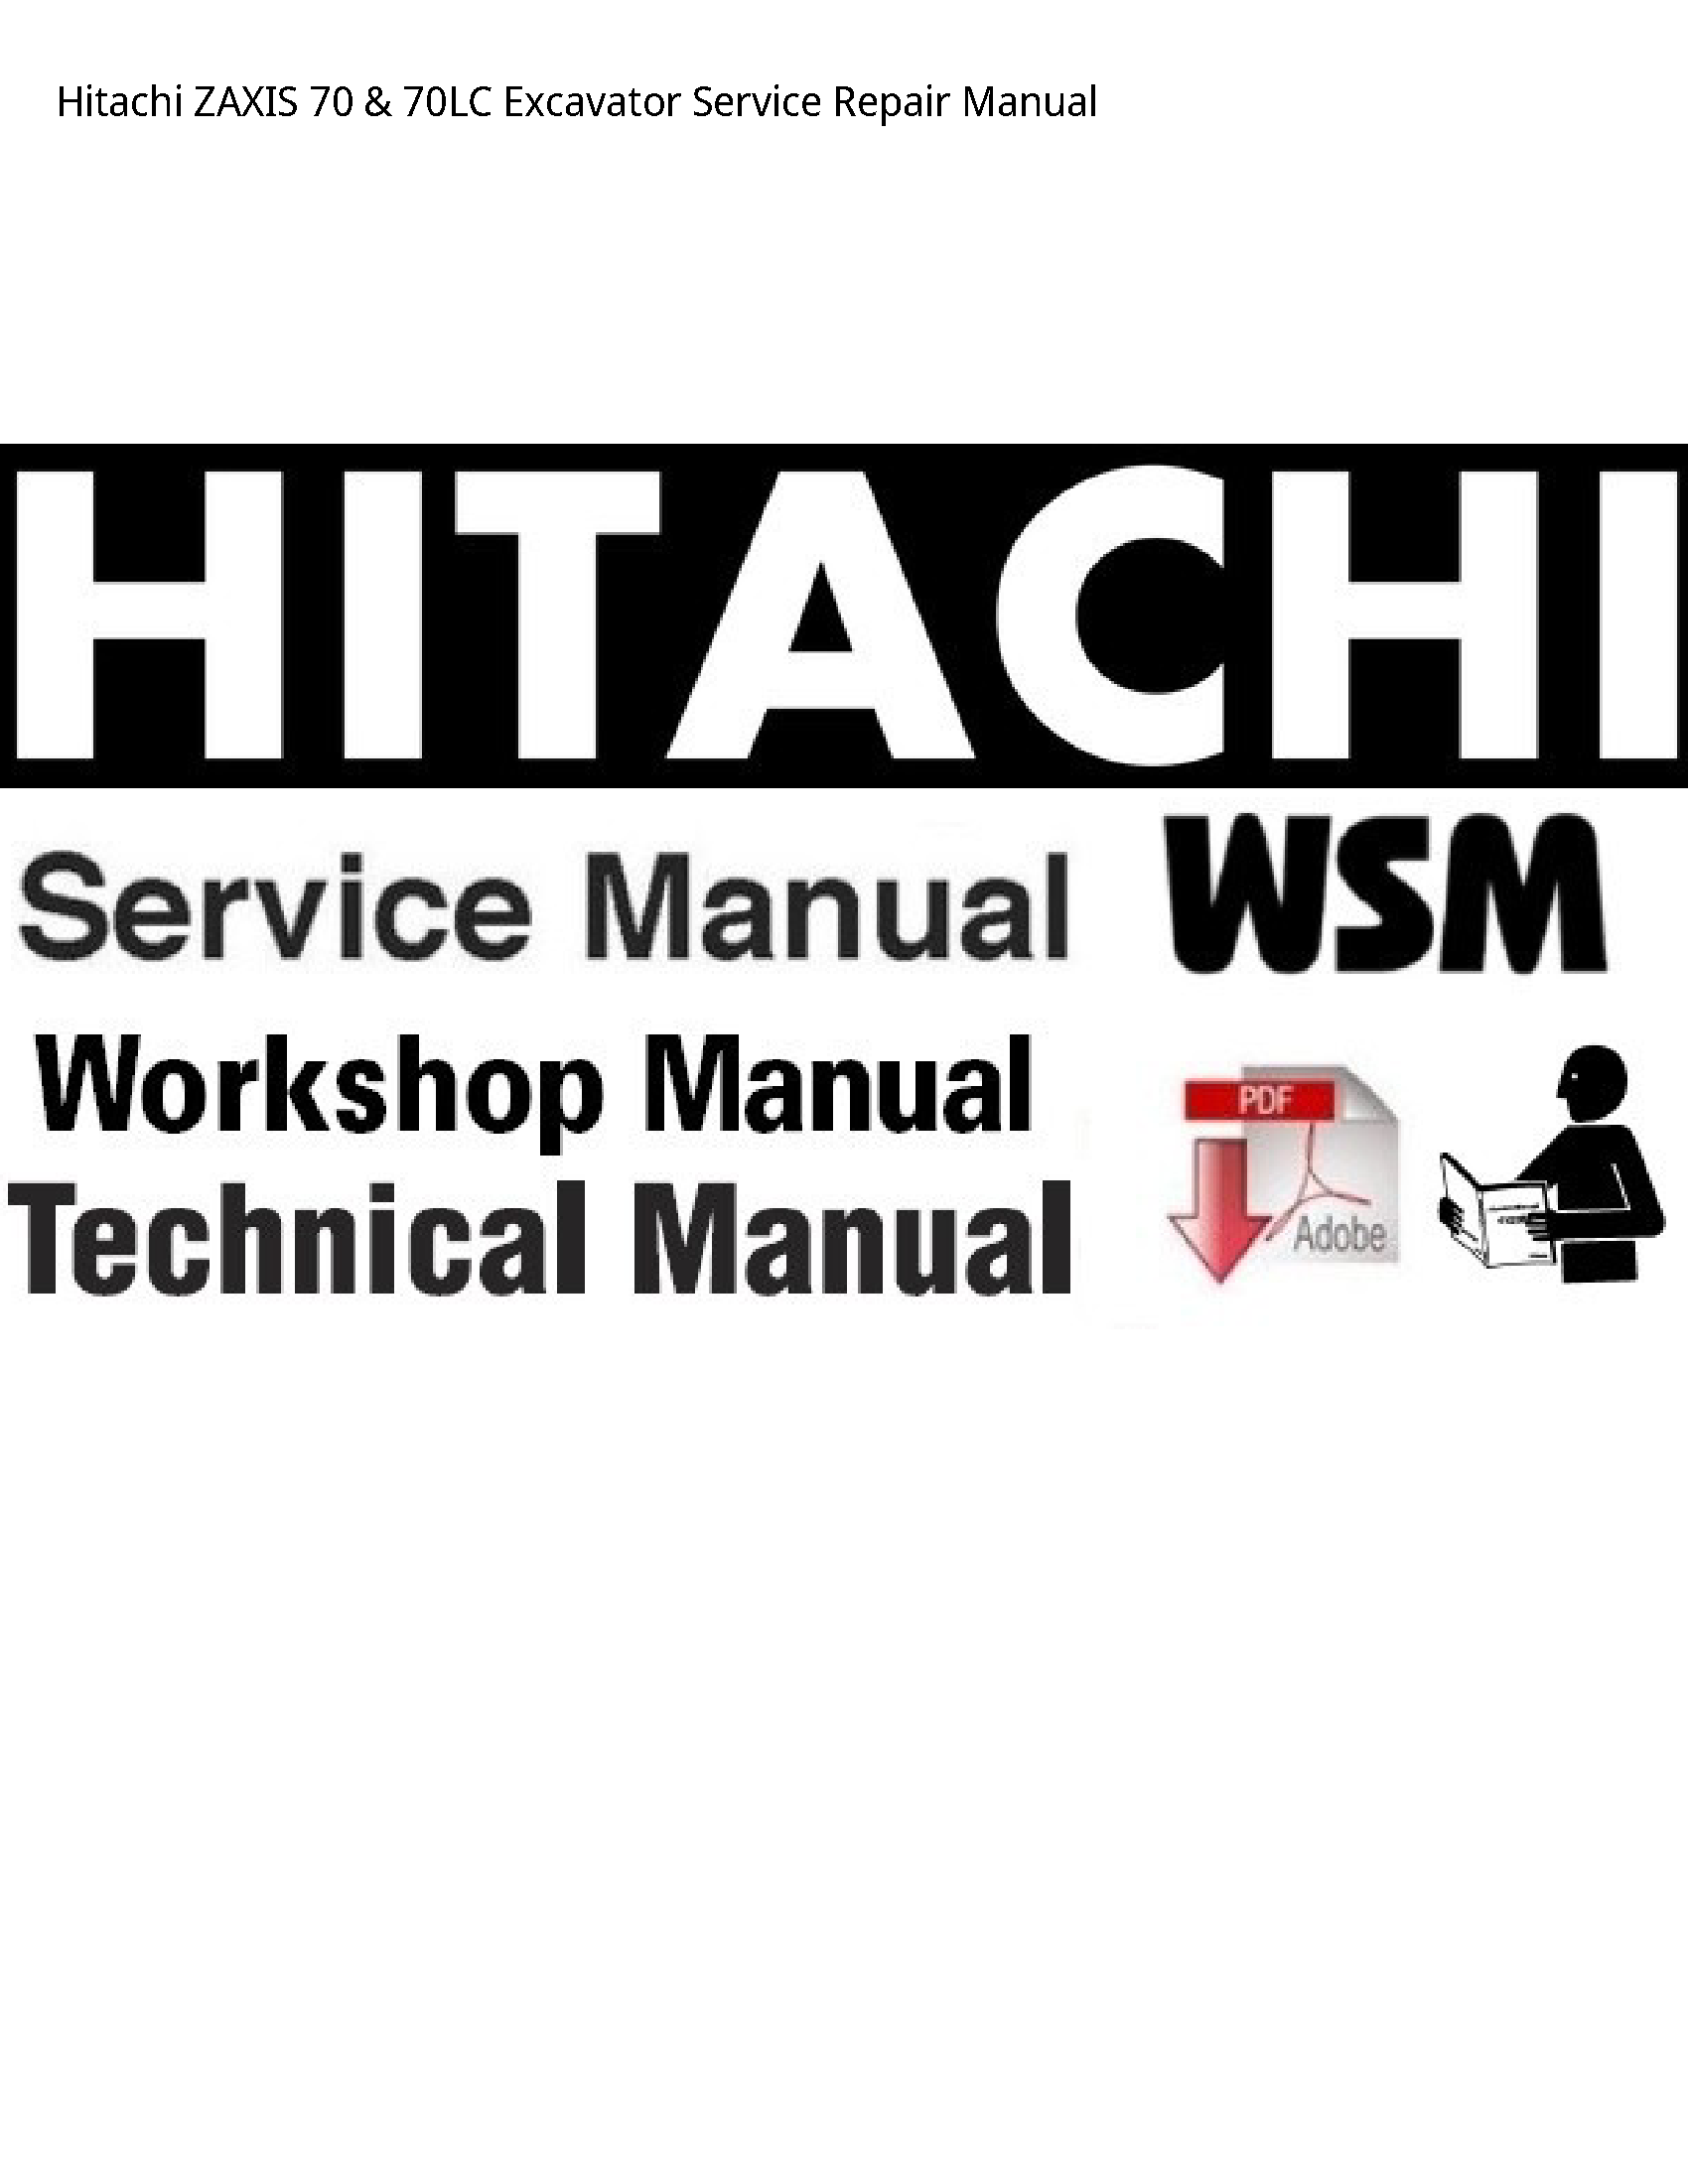 Hitachi 70 ZAXIS Excavator manual